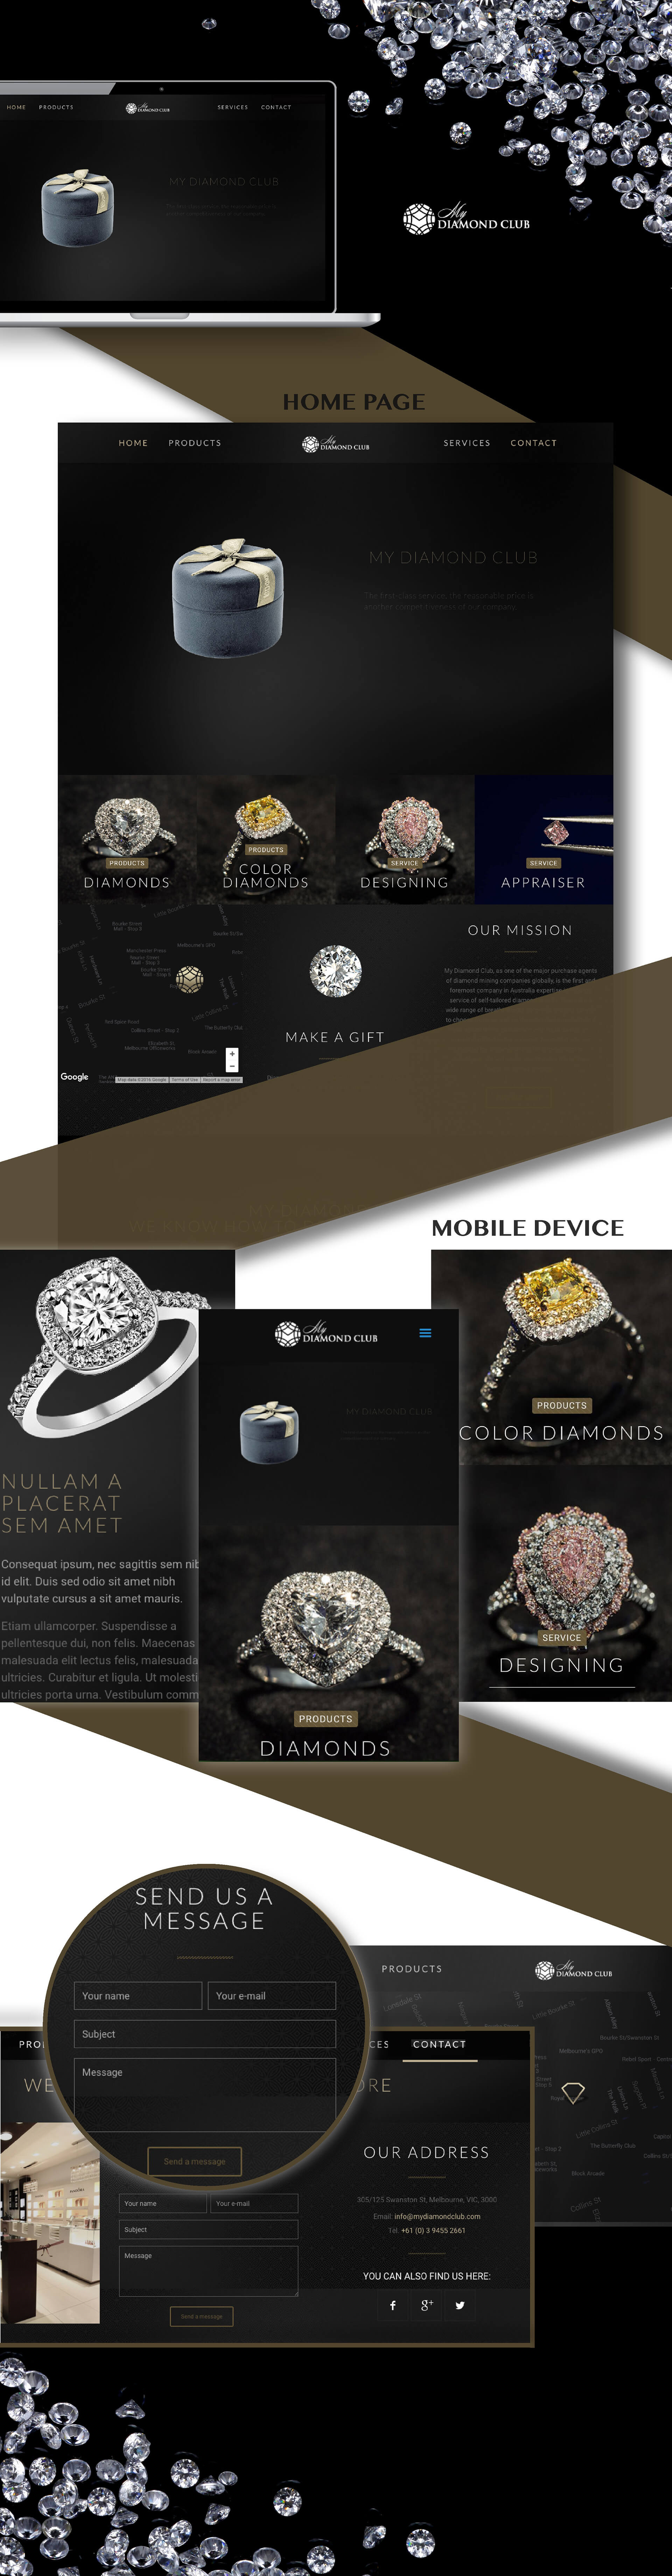 mydiamondclub-website-display